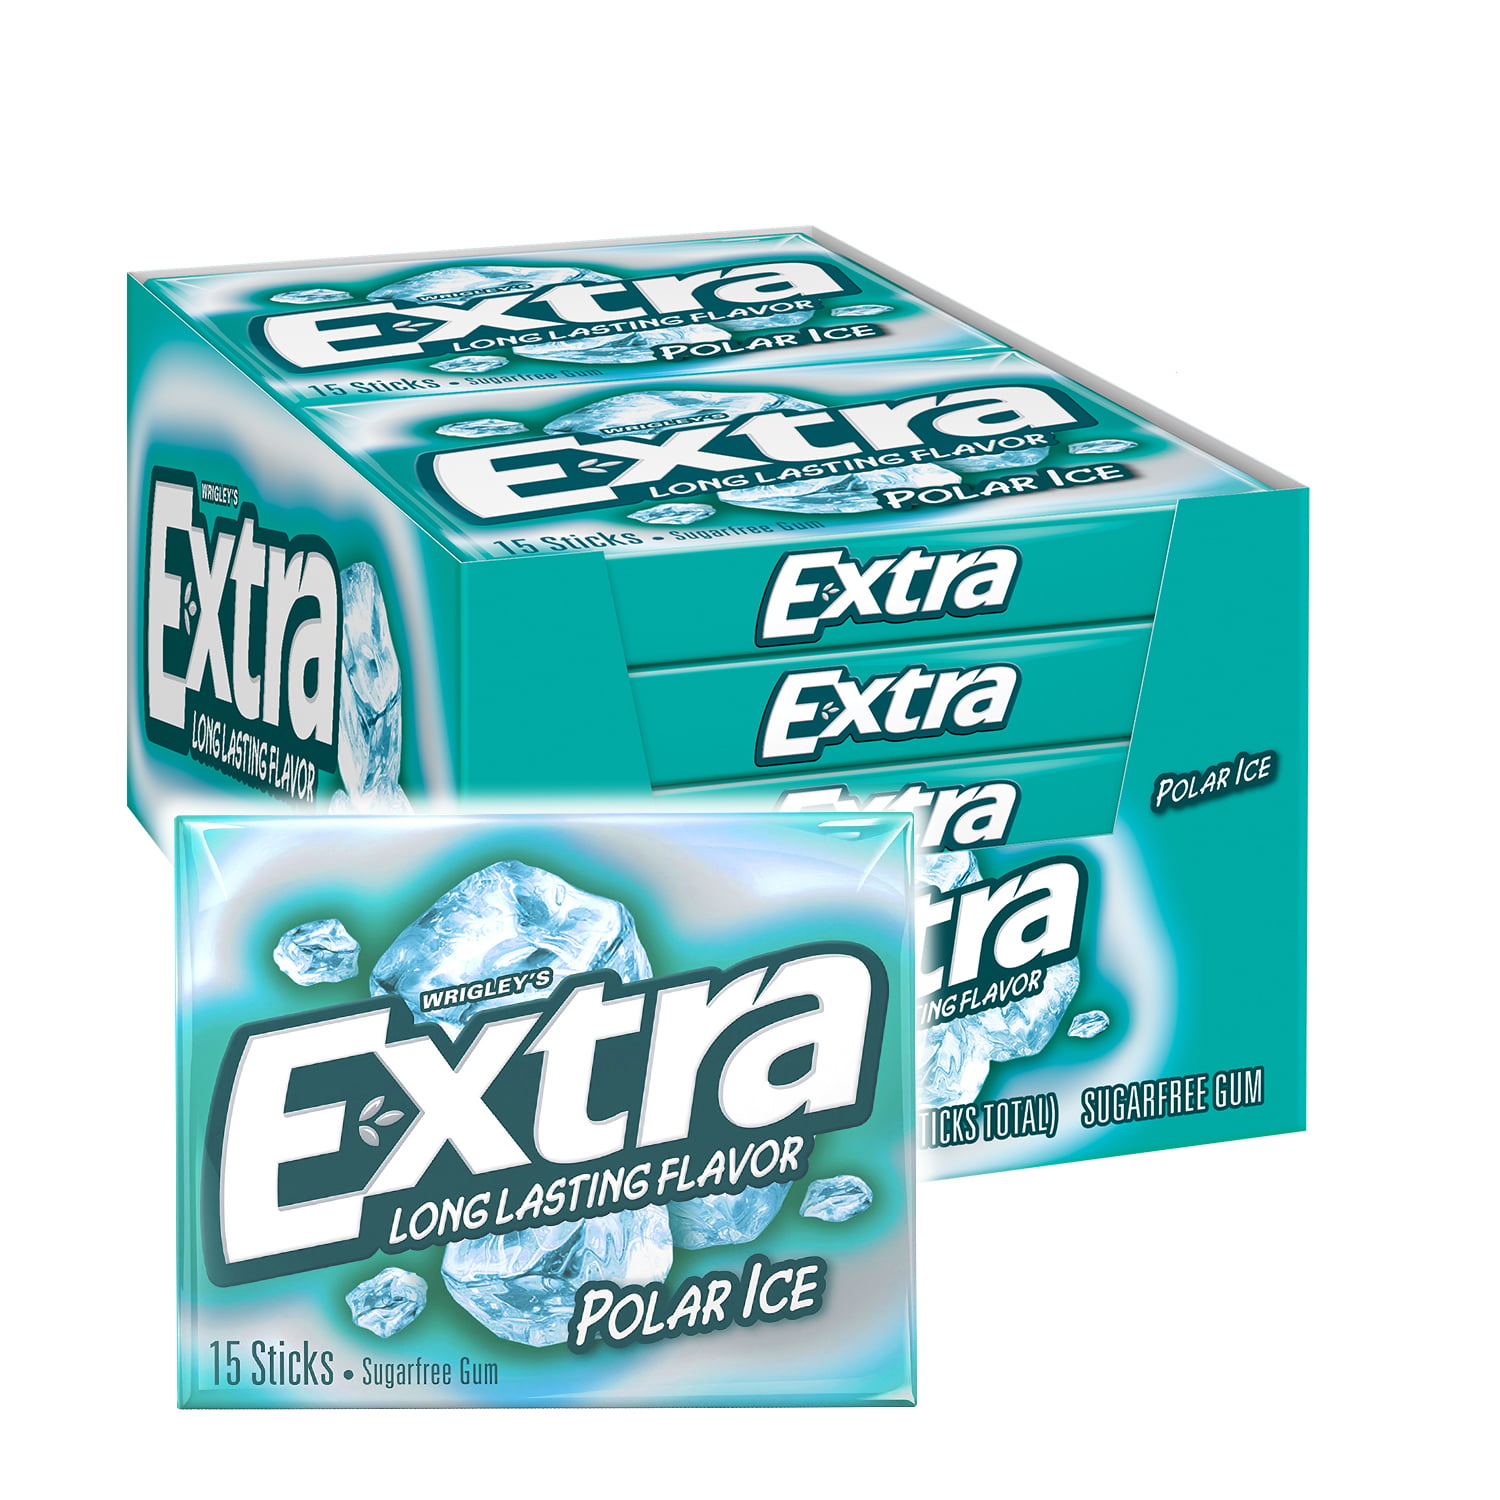 extra-gum-polar-ice-sugarfree-gum-15-sticks-pack-of-10-walmart